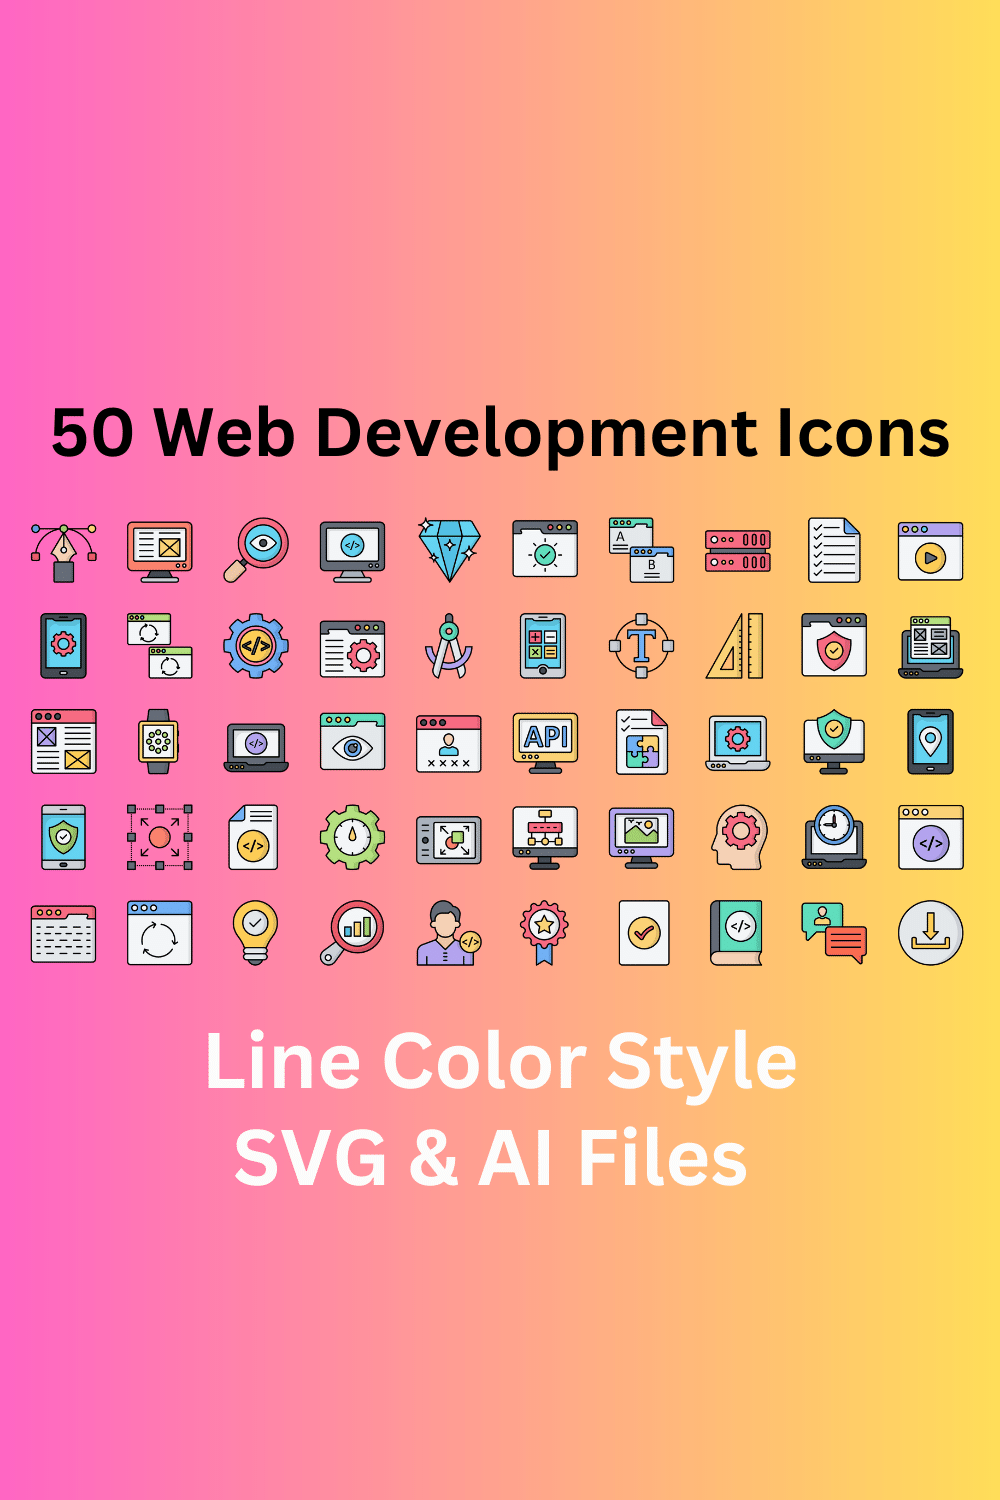 Web Development Icon Set 50 Line Color Icons - SVG And AI Files pinterest preview image.